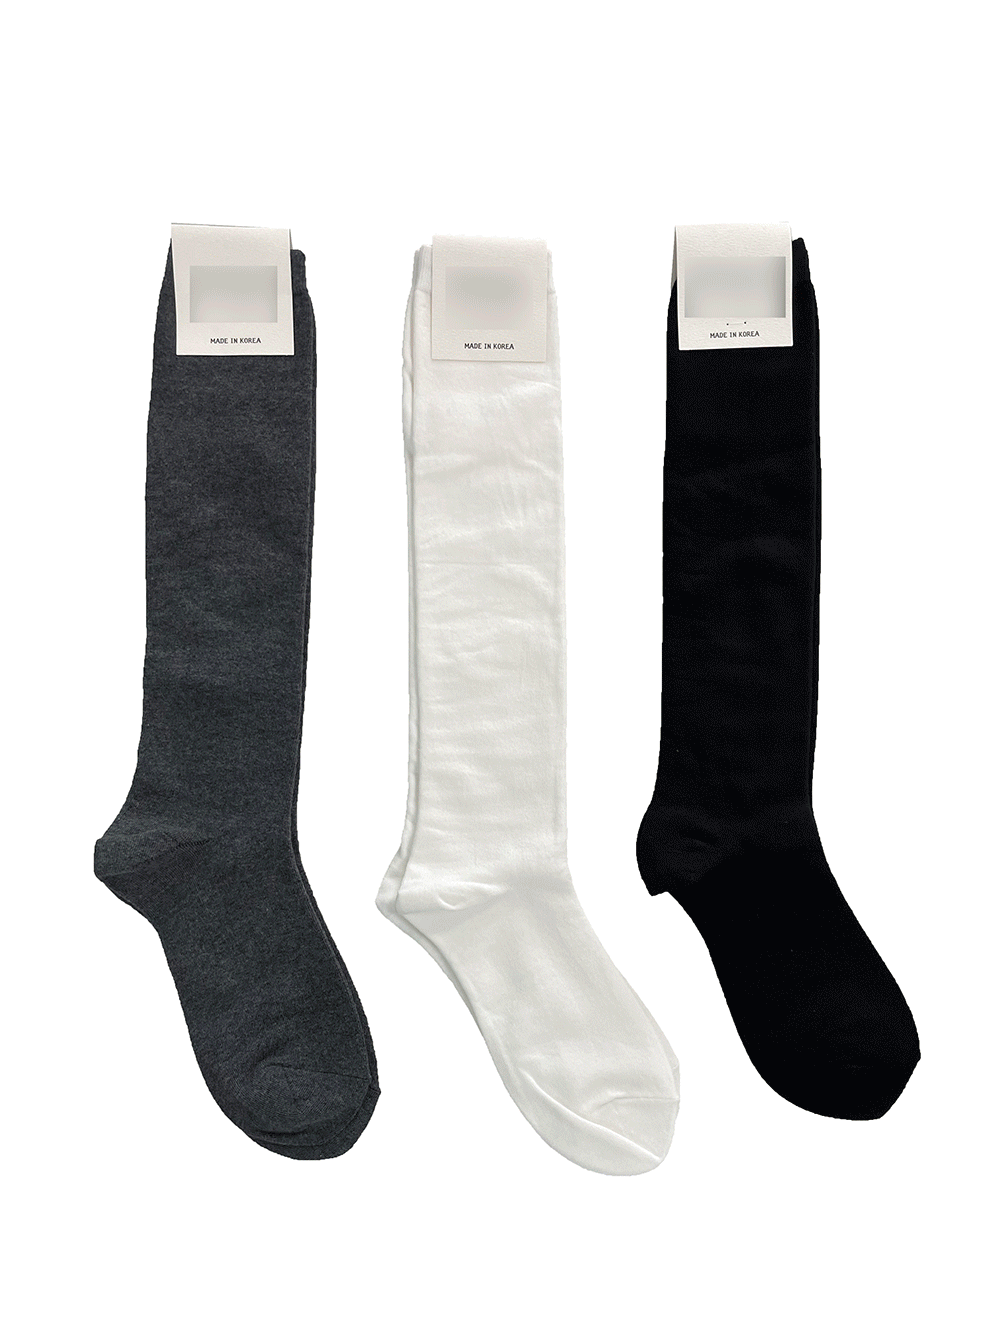 Premium long socks (국내생산)